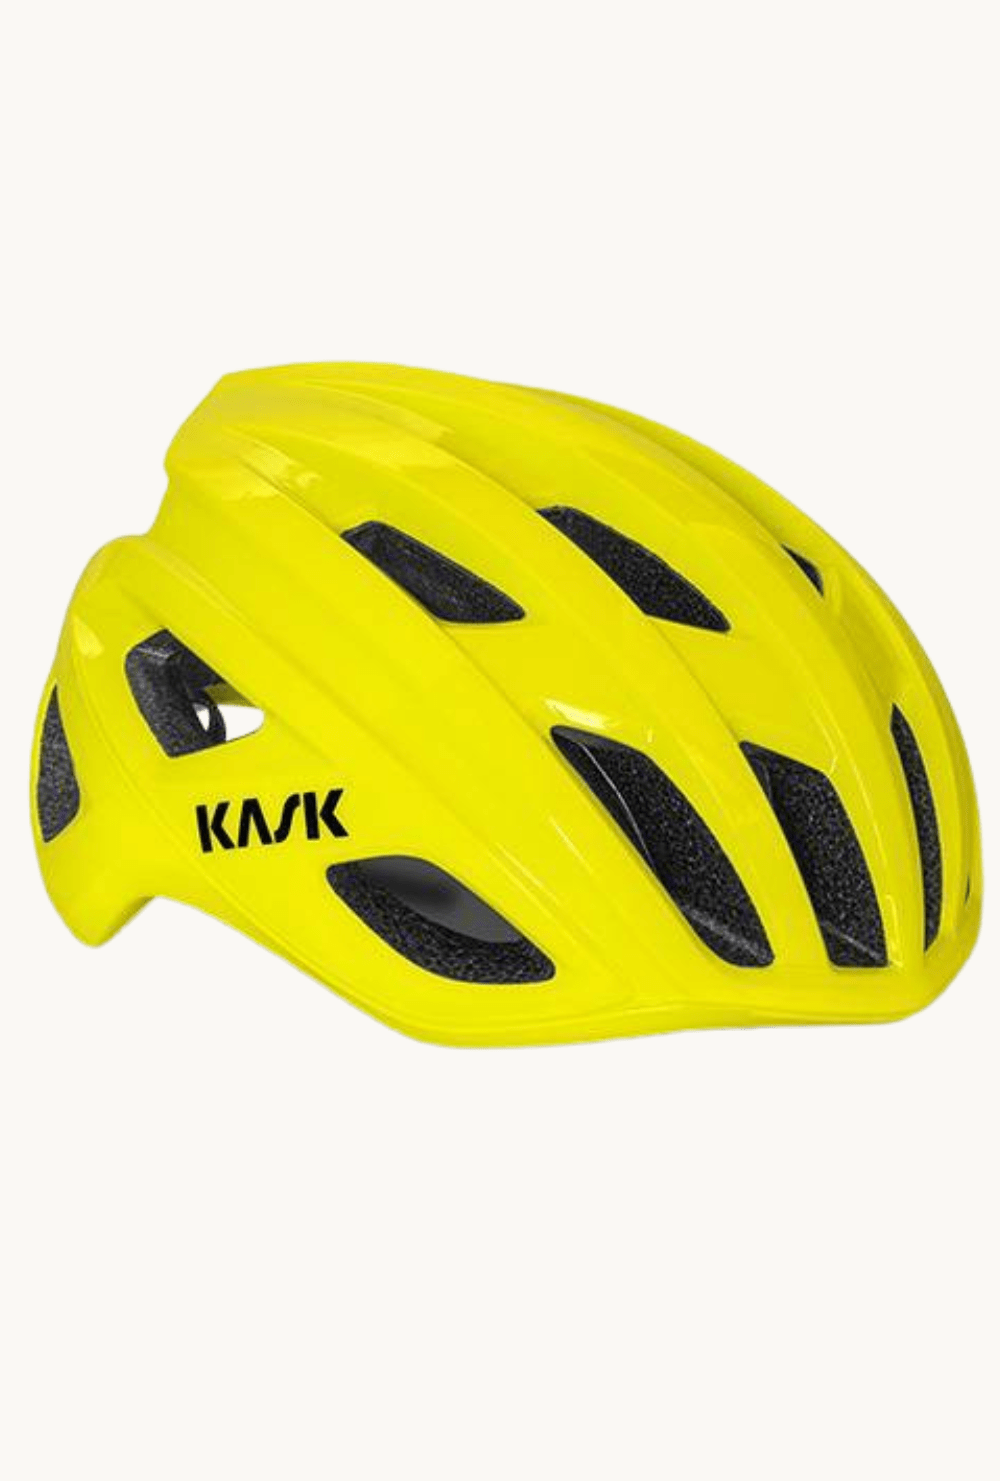 Helmet - Kask Mojito Yellowsmall / Yellow